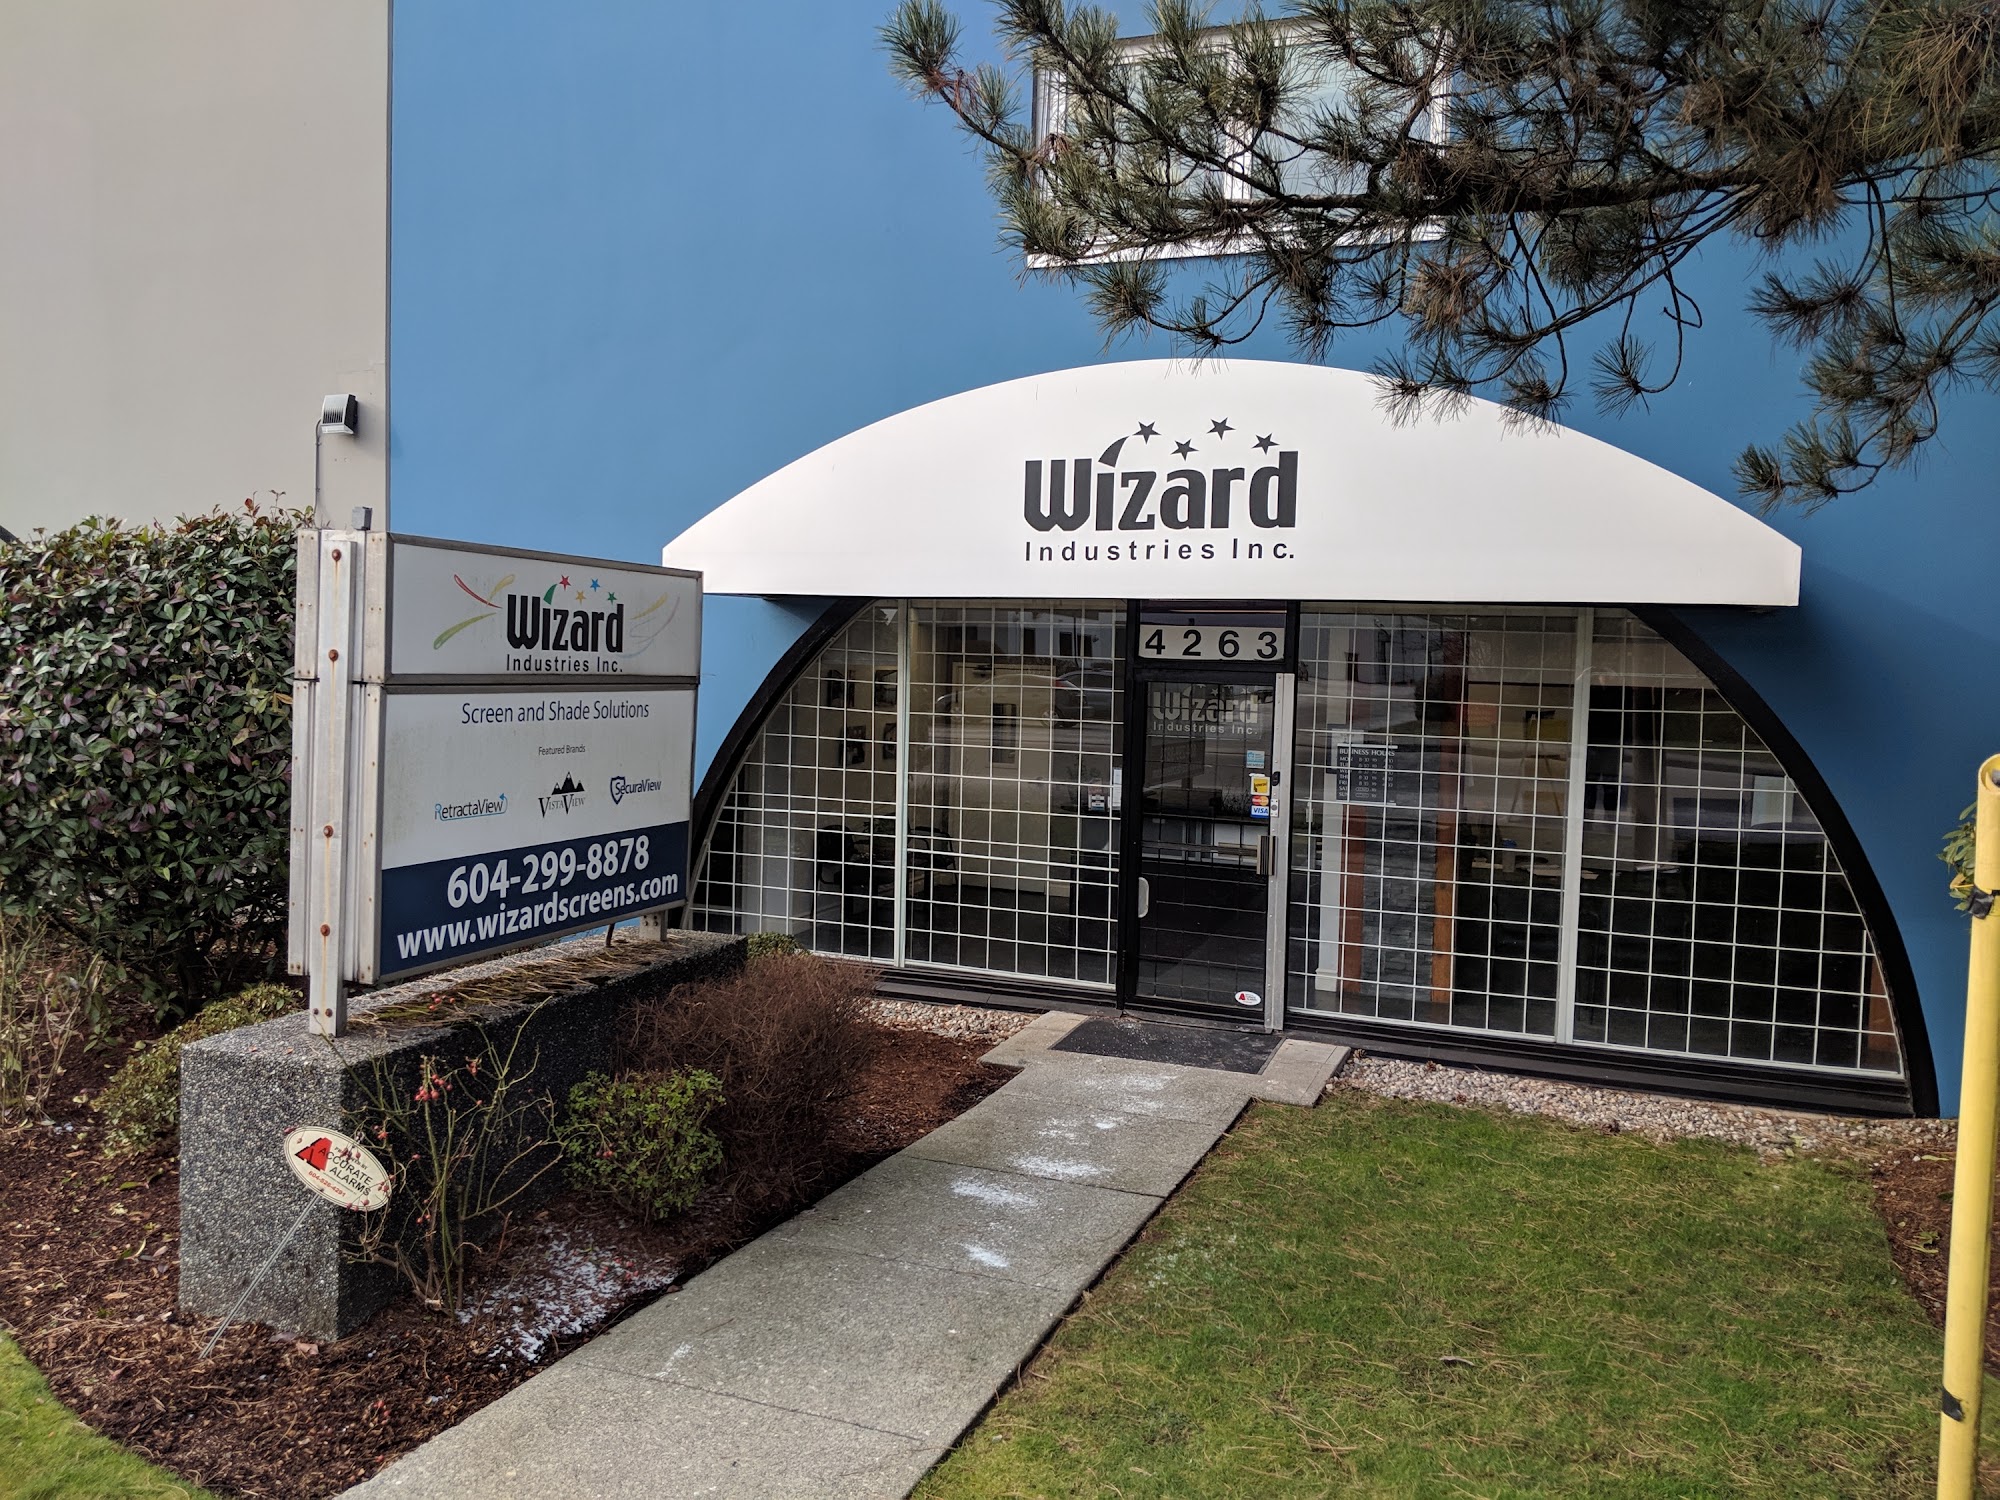 Wizard Screen Solutions